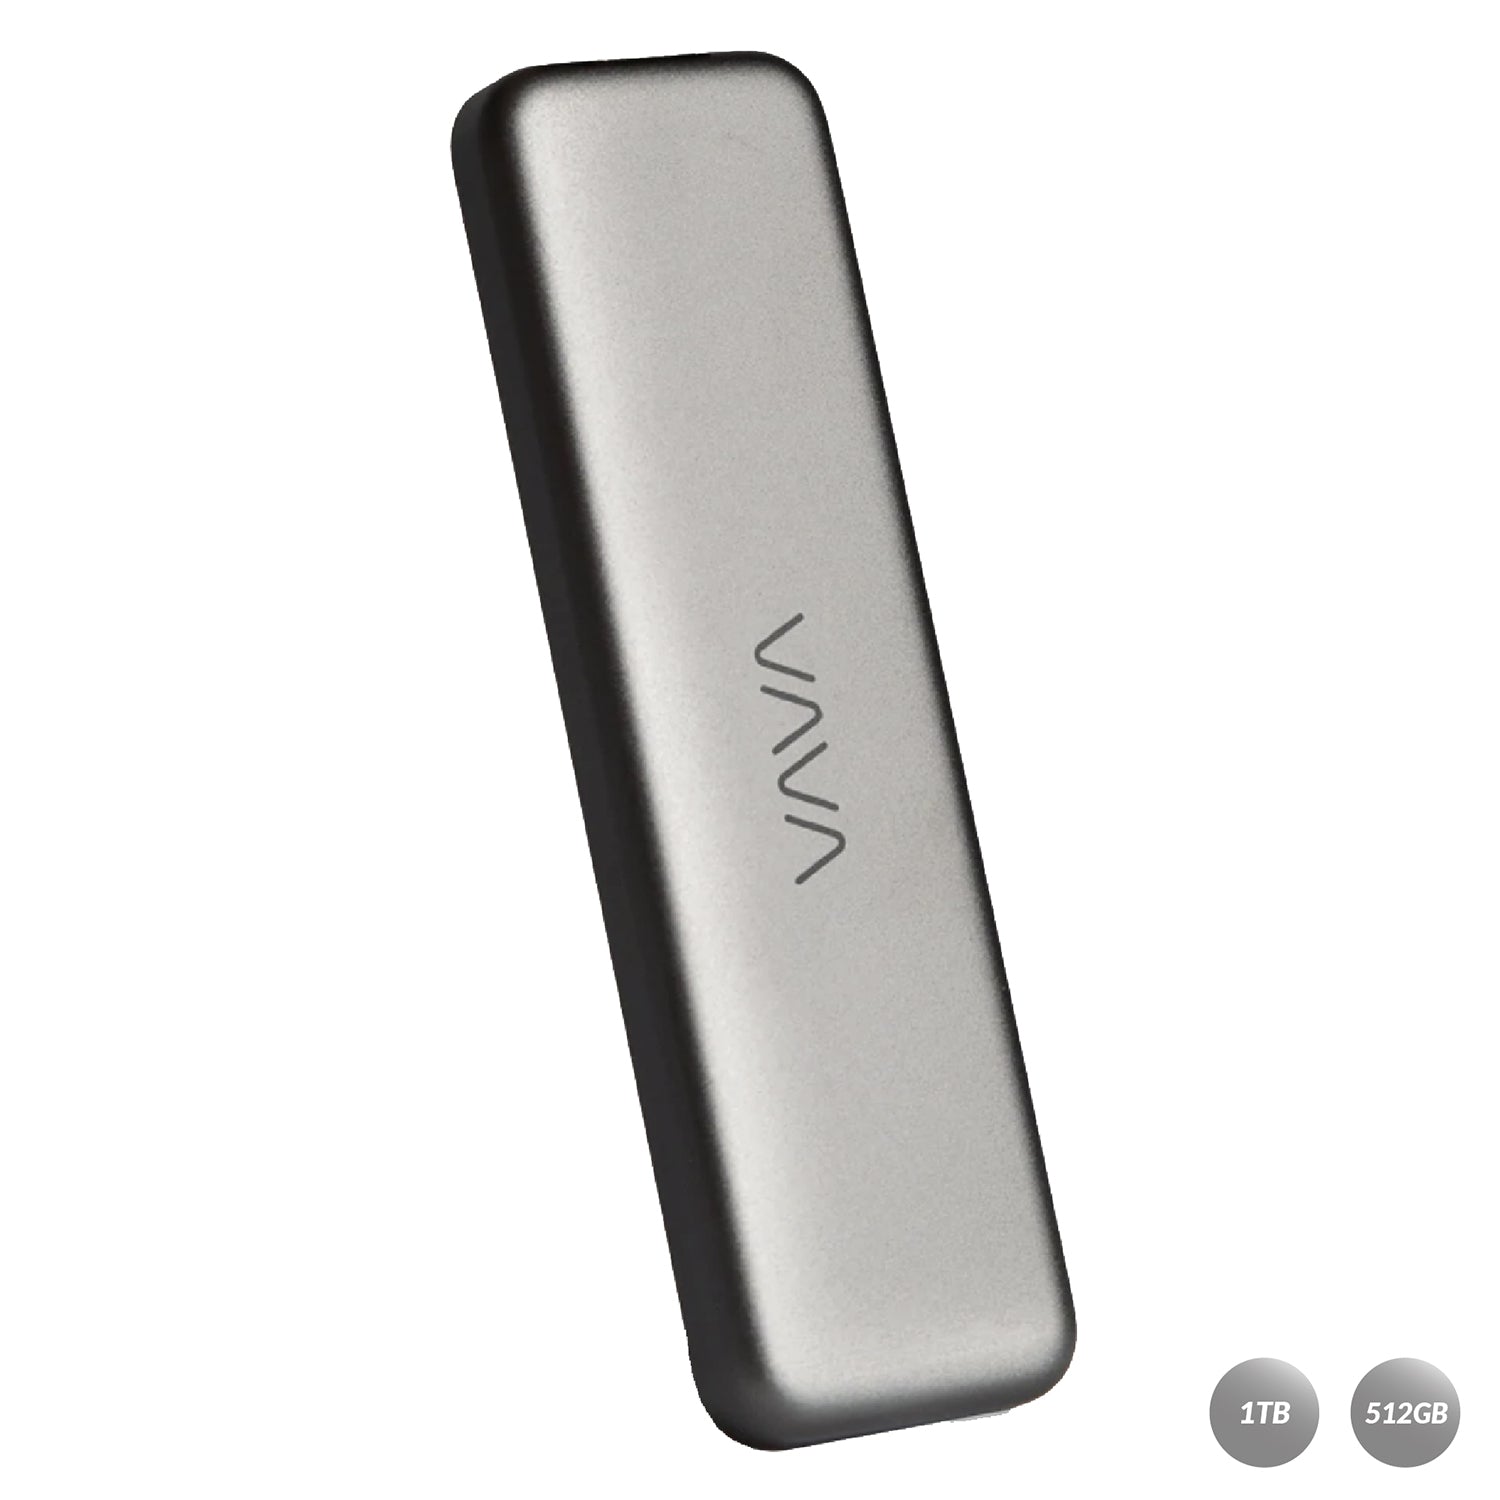 VAVA VA-UM003 Portable Mini External SSD Pro Hard Drive with 540MB/S Data Transfer, NAND Flash, USB 3.1 Gen 2 Interface, ATA Lock, Mini USB C Default VAVA 